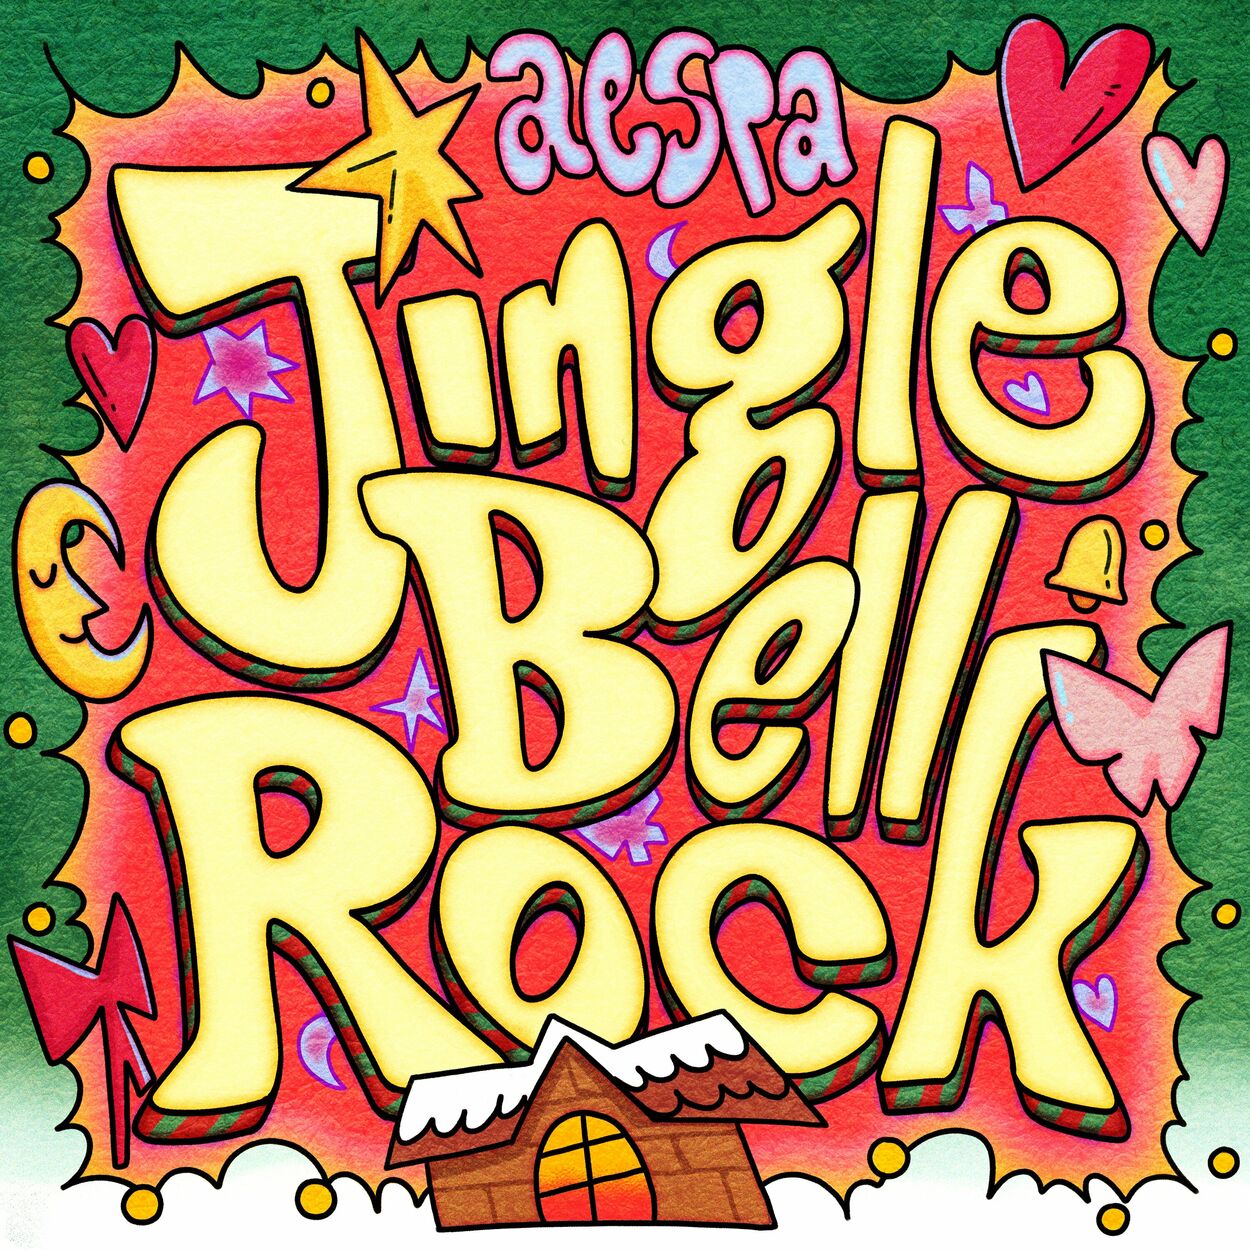 aespa – Jingle Bell Rock – Single